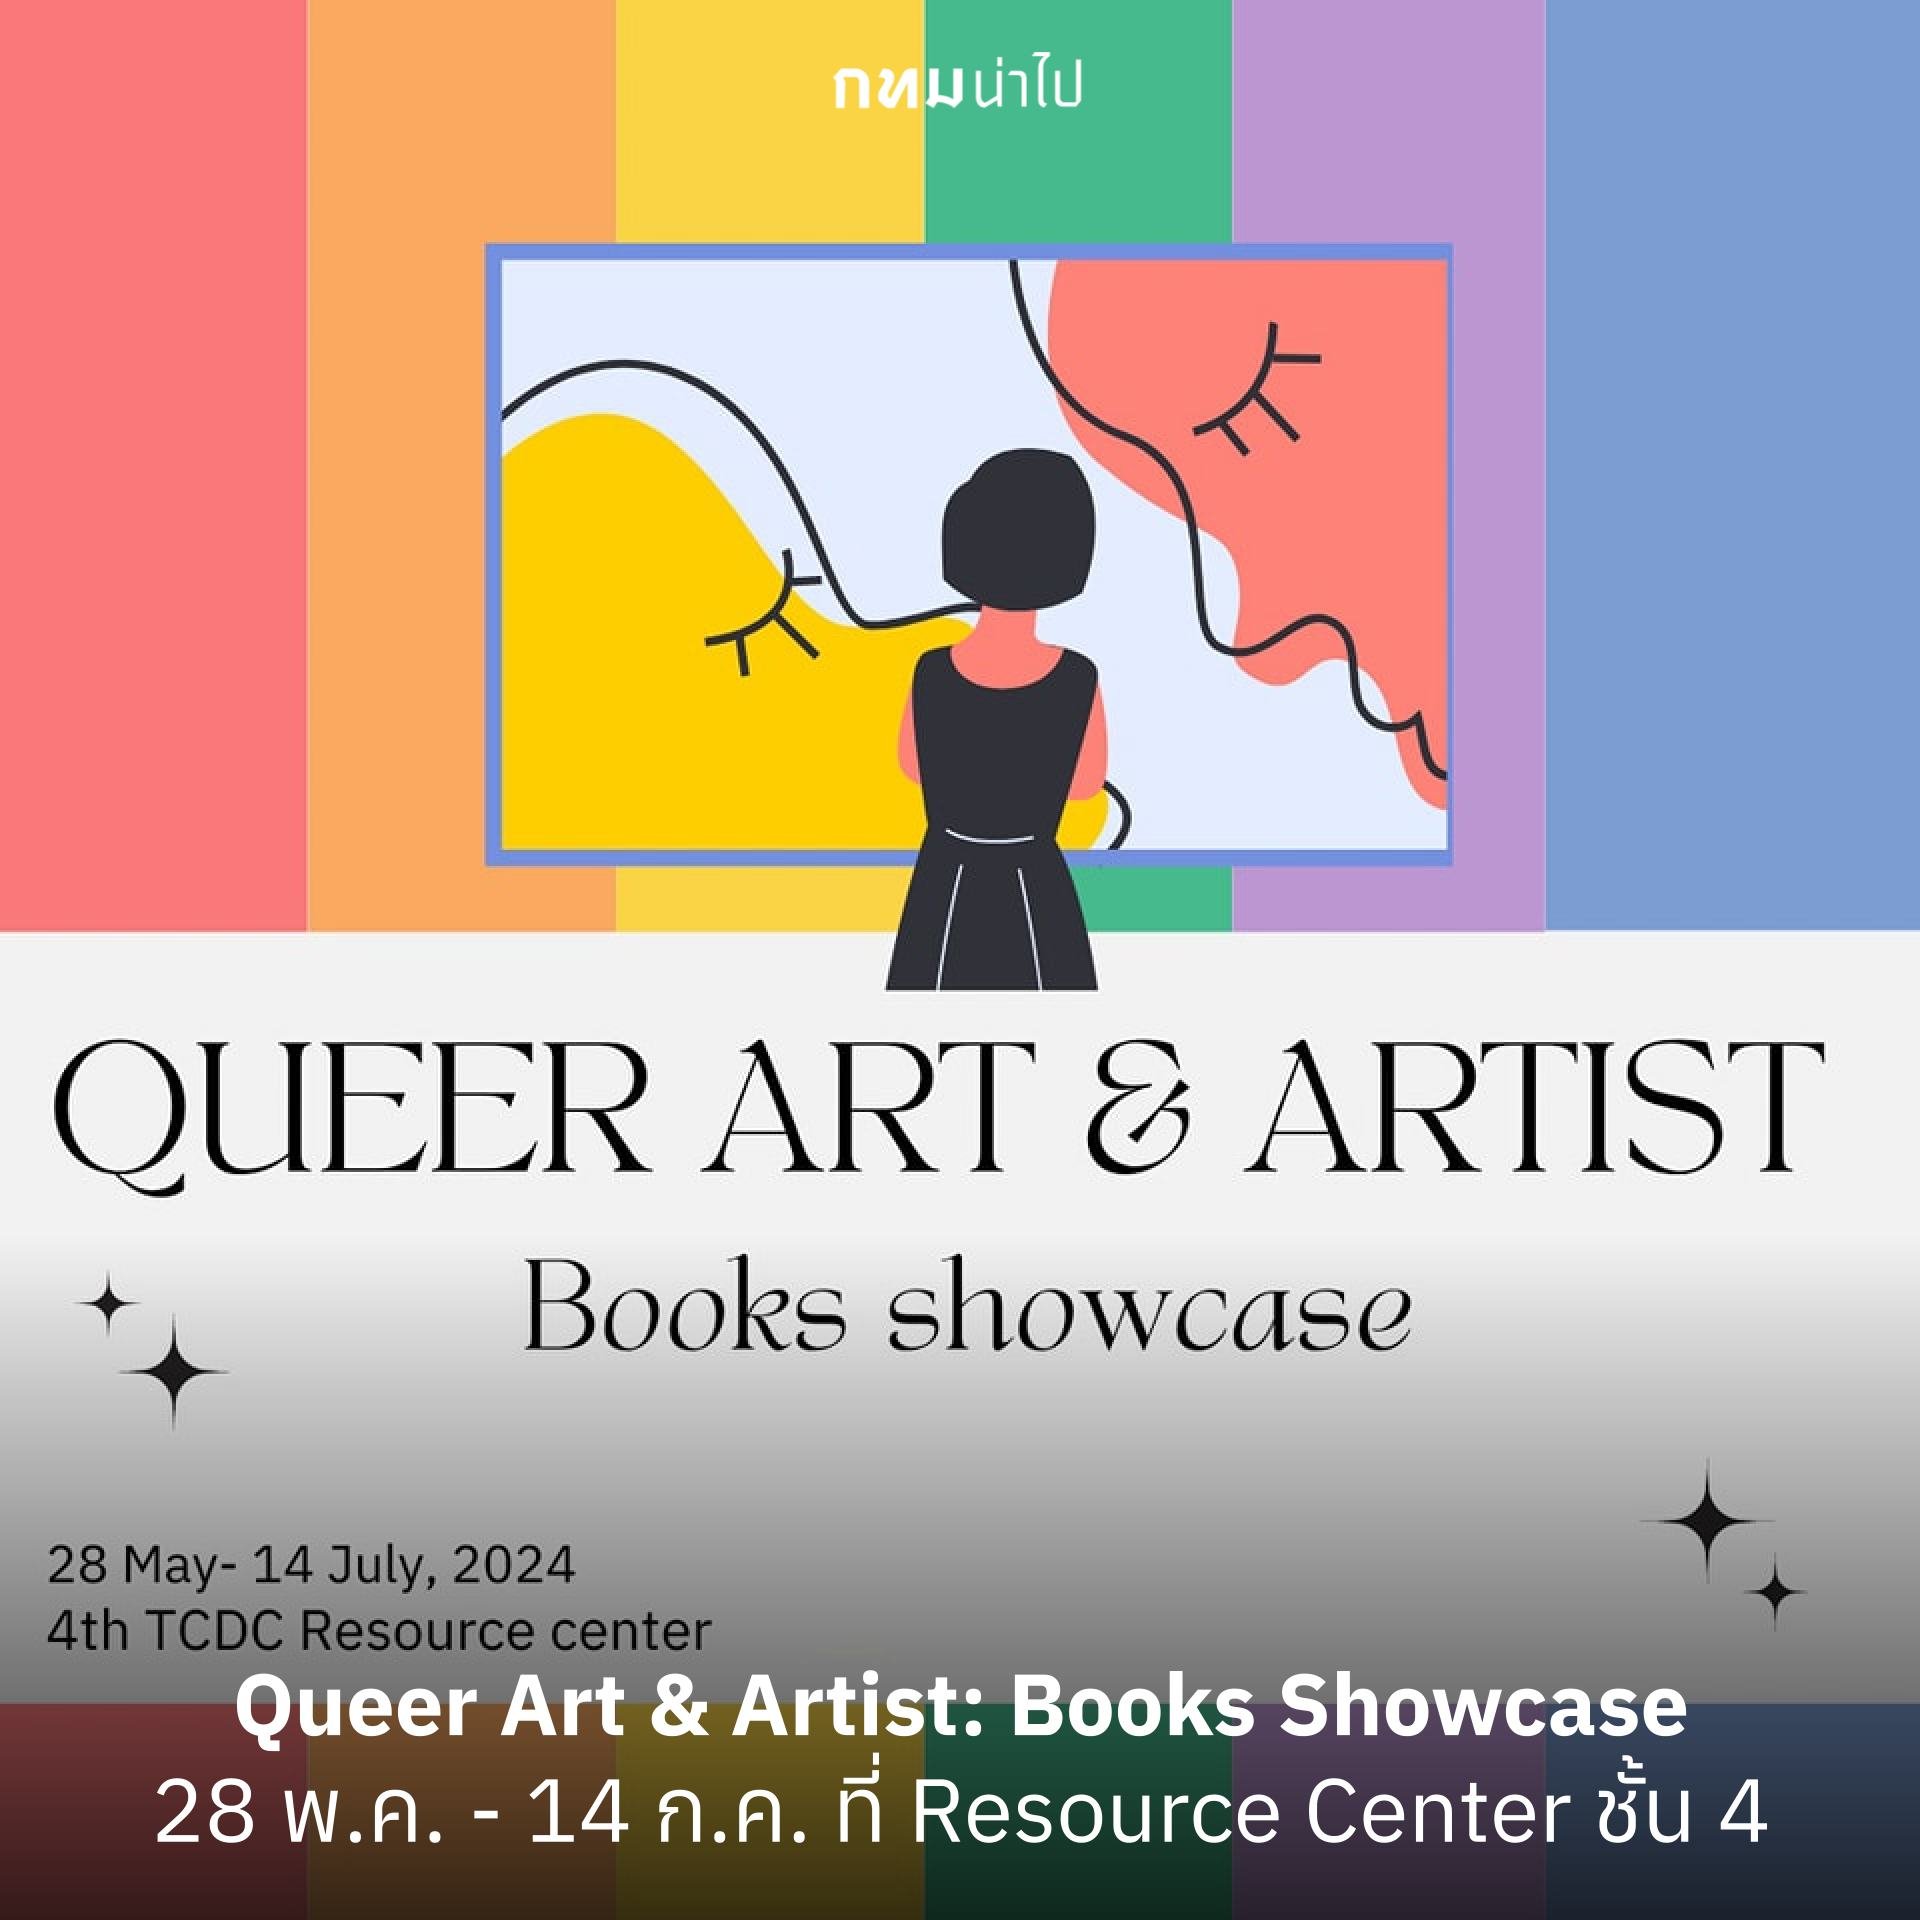 Queer Art & Artist Books Showcase